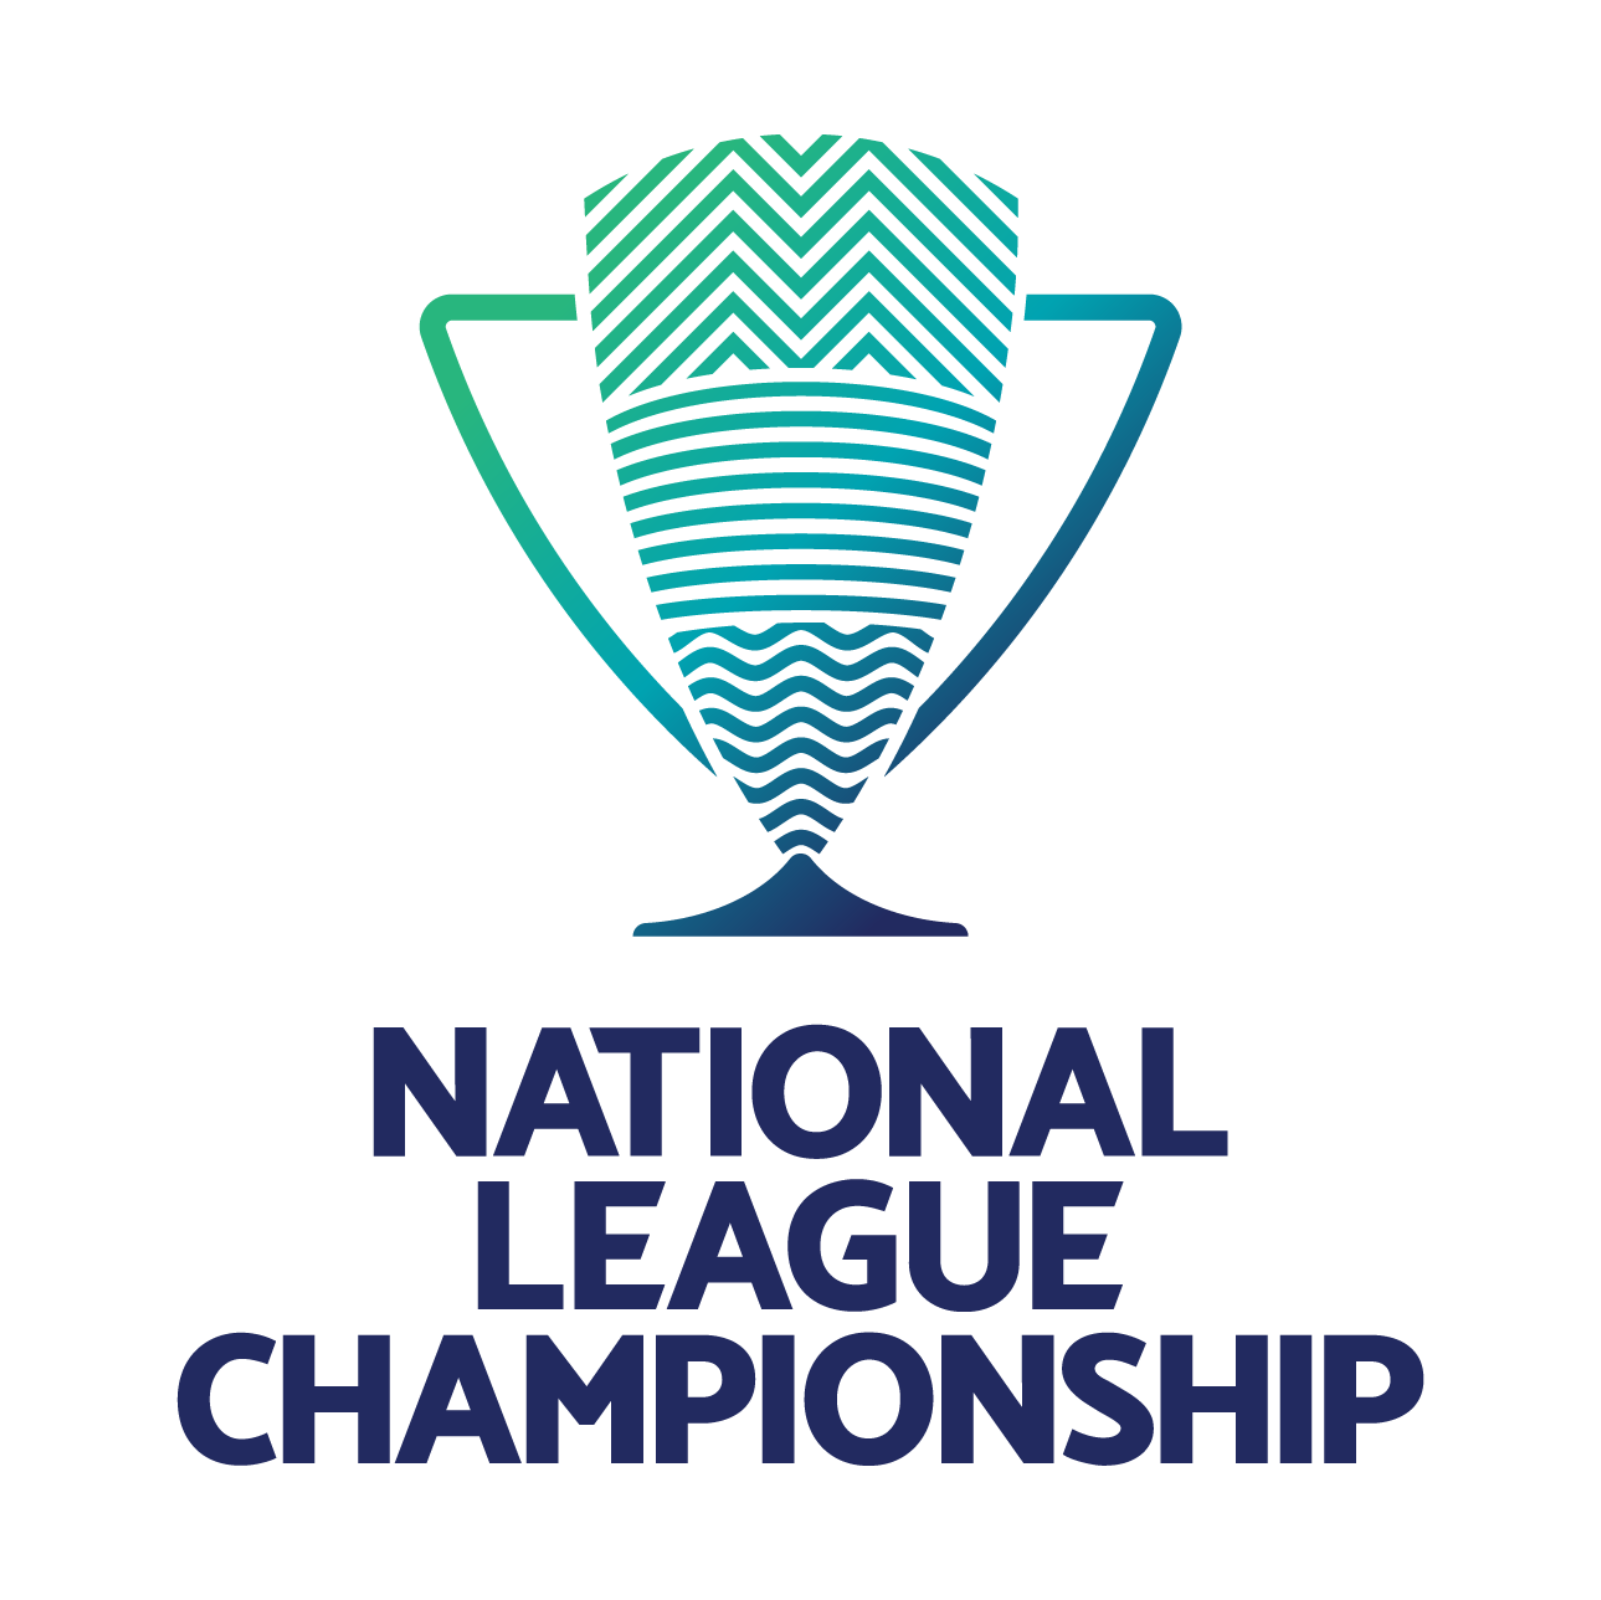 NZ Football - National League Championship